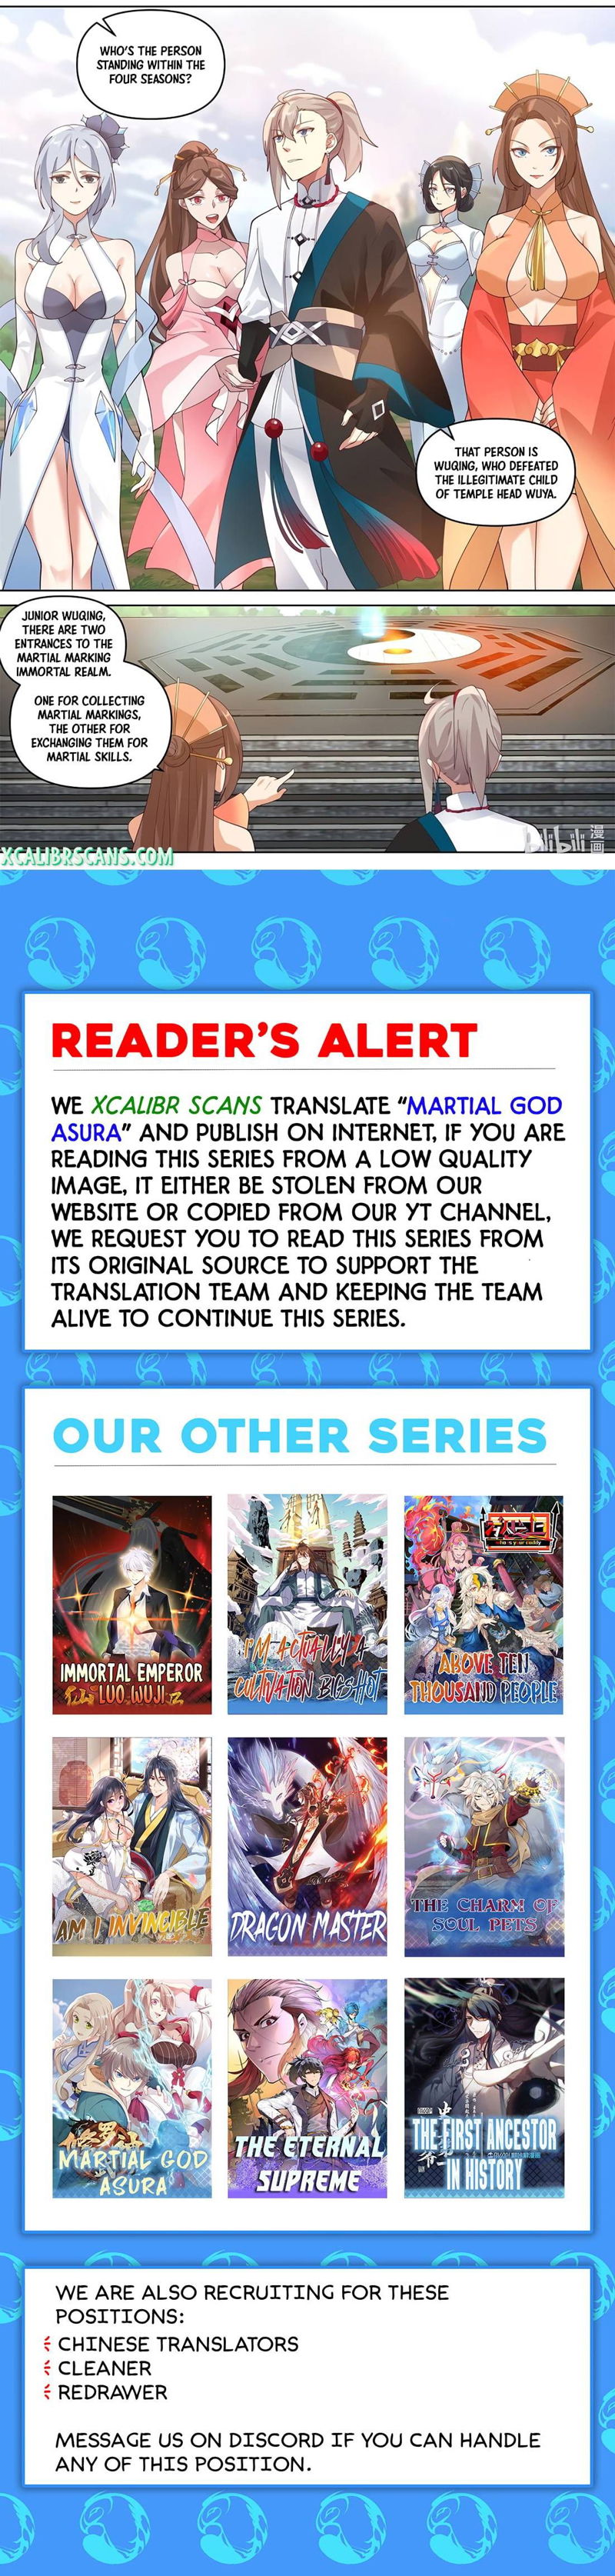 Martial God Asura Chapter 470 page 10